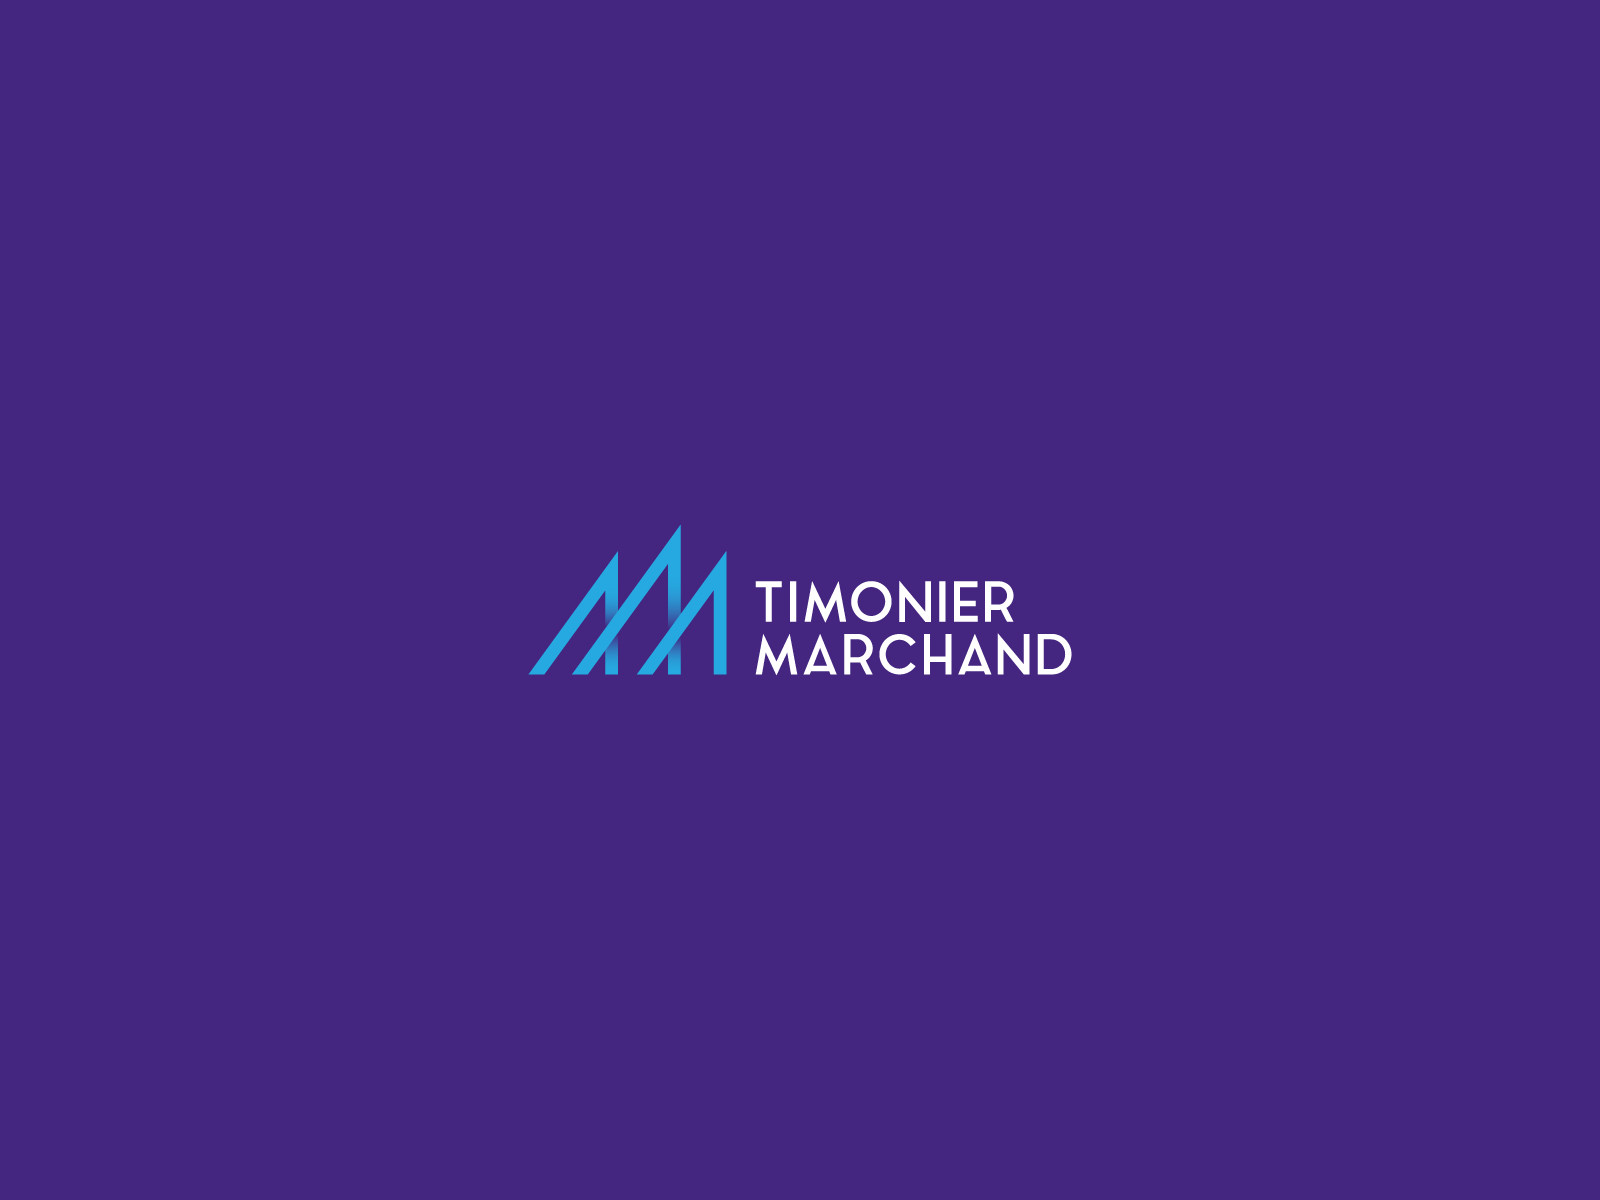 Tm logo2